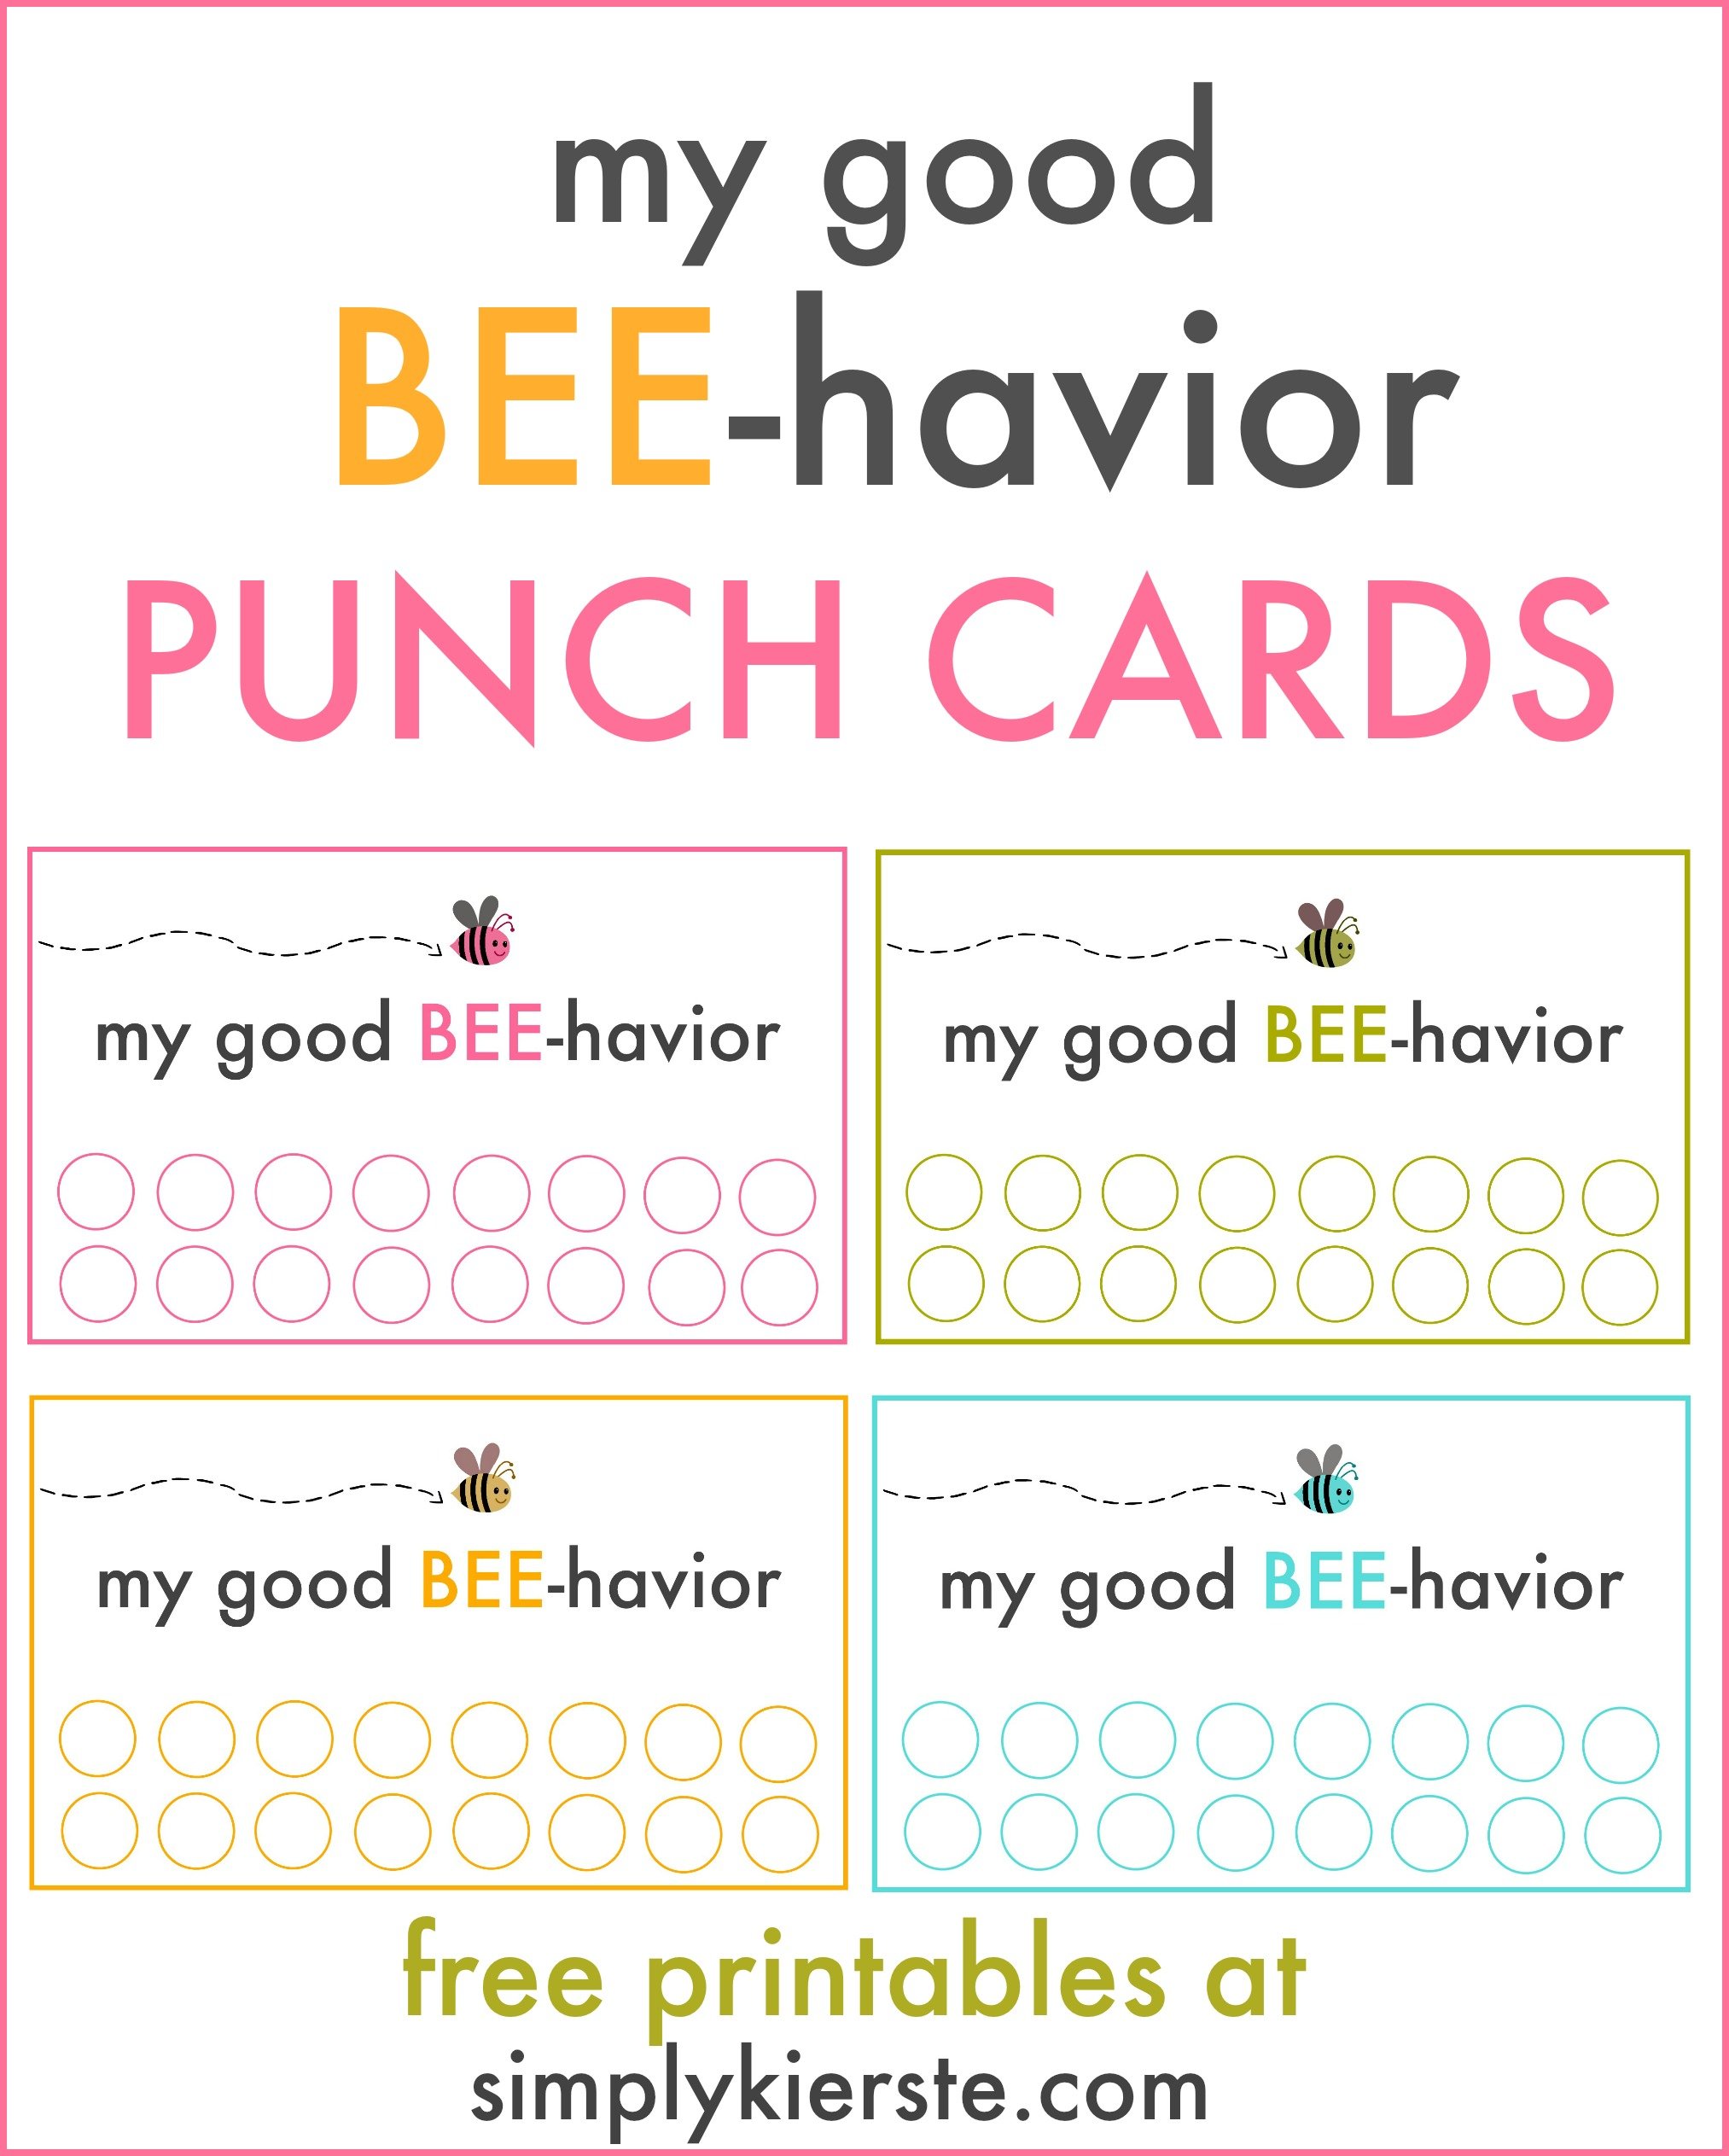 Good behavior punch cards